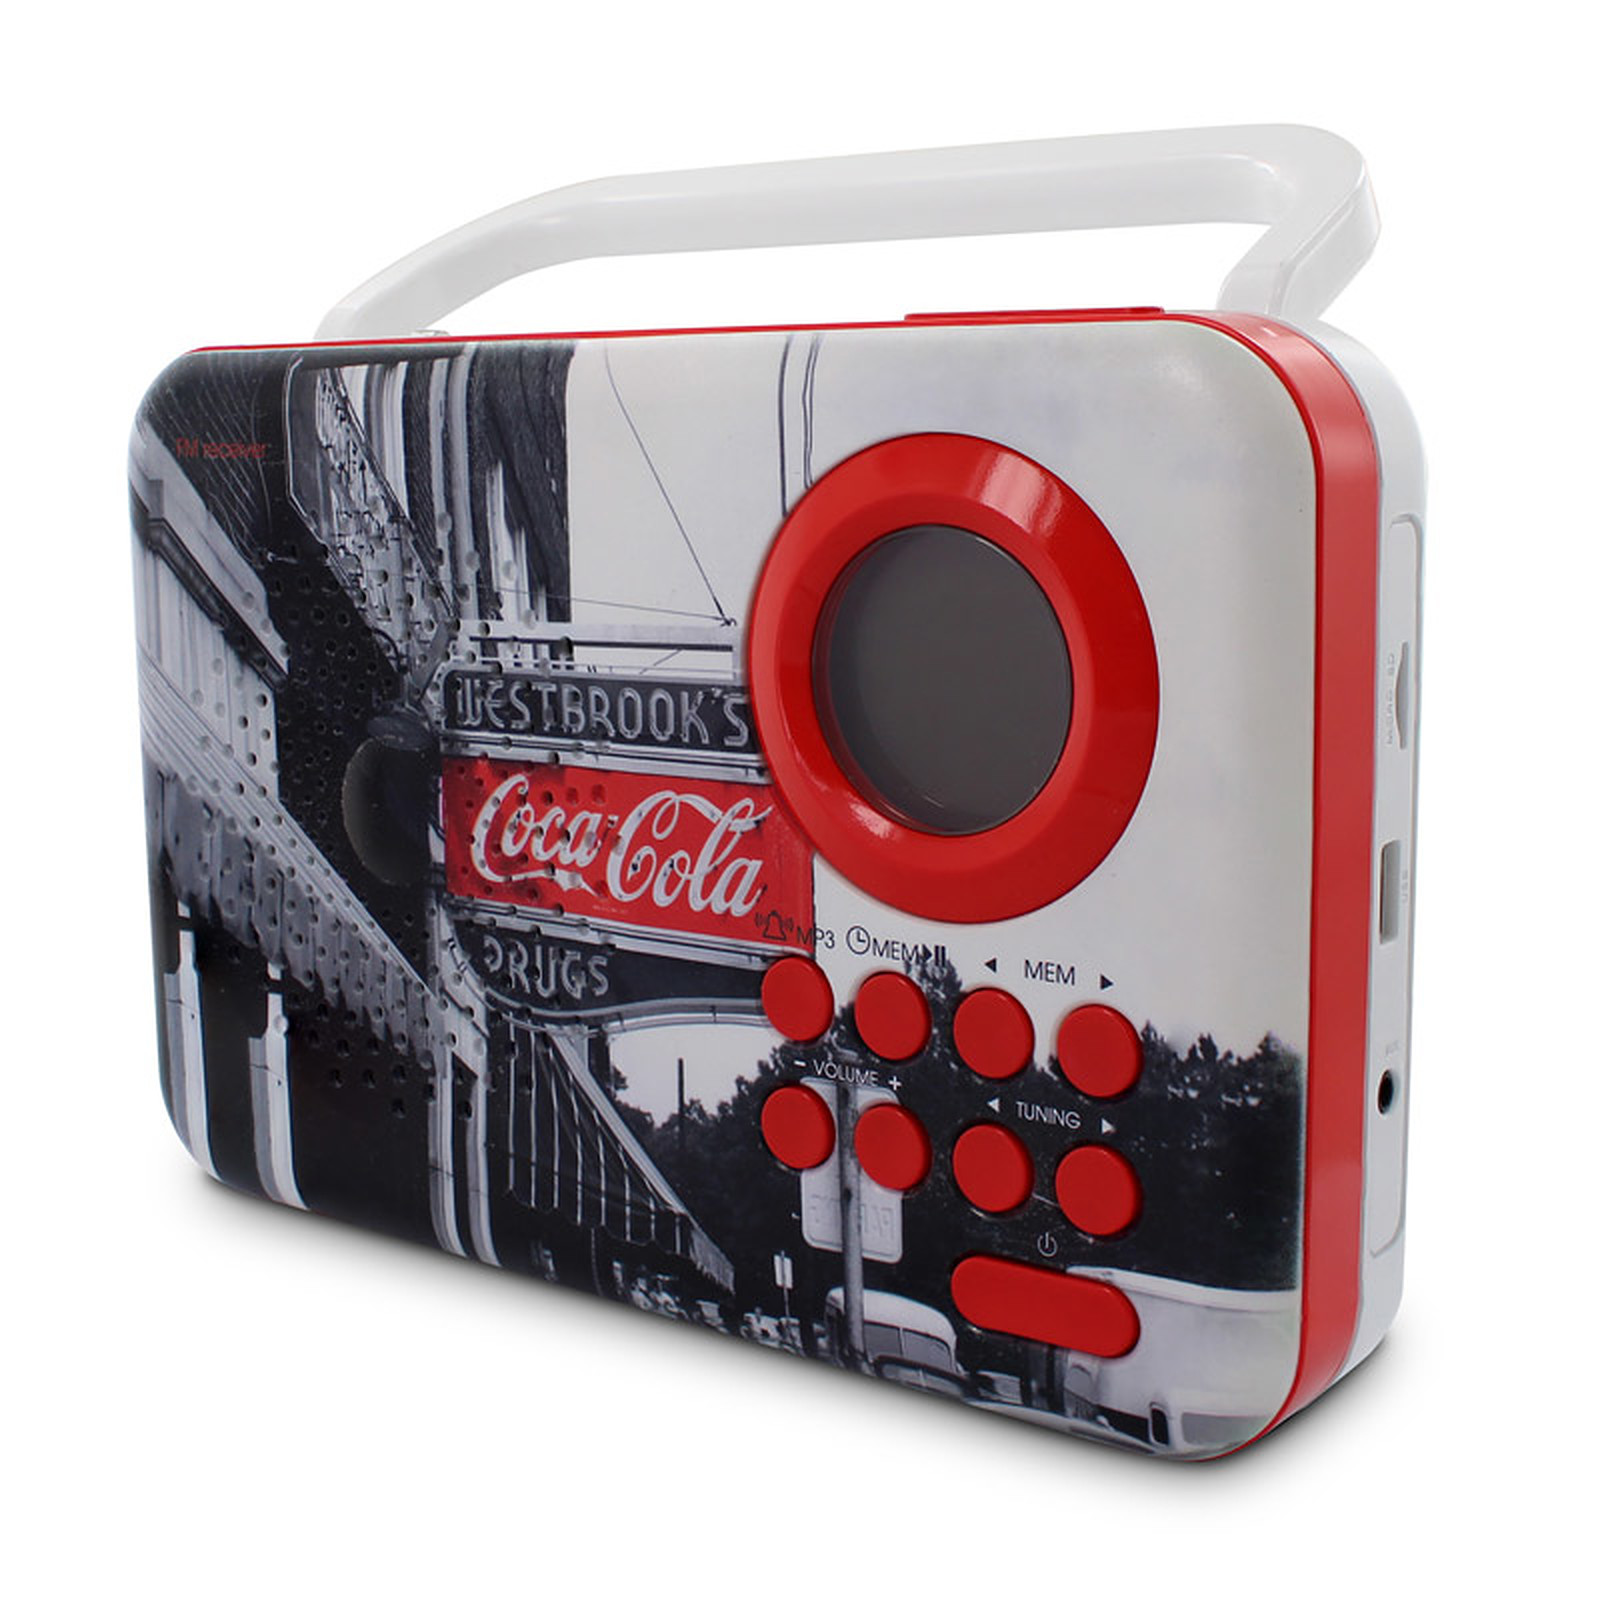 Coca-cola 477510 - Radio & radio reveil Metronic